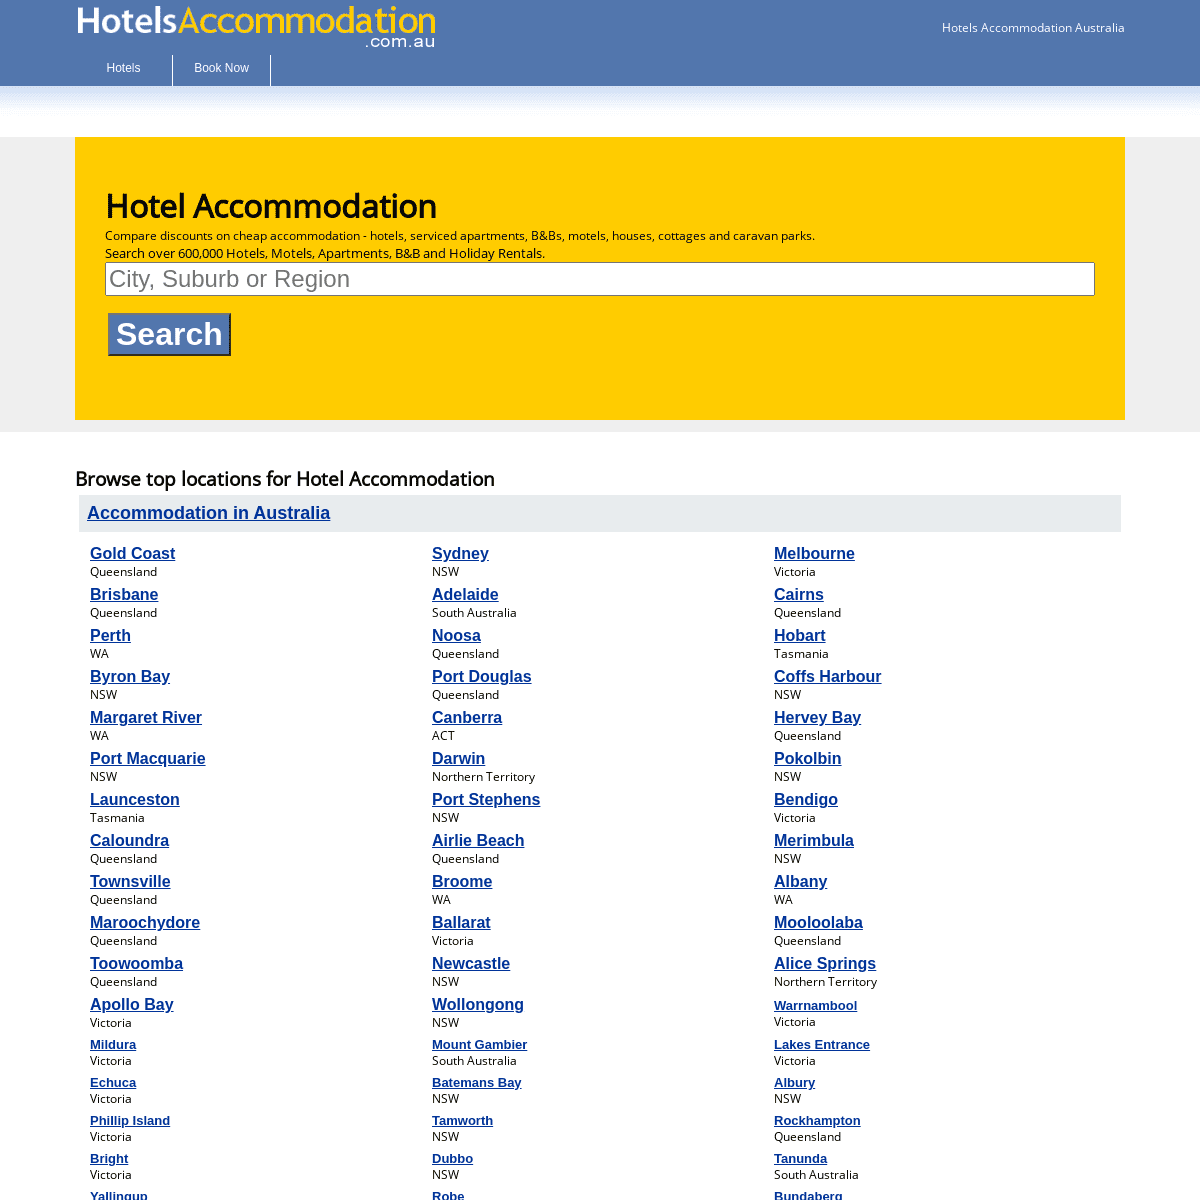 A complete backup of https://hotelsaccommodation.com.au